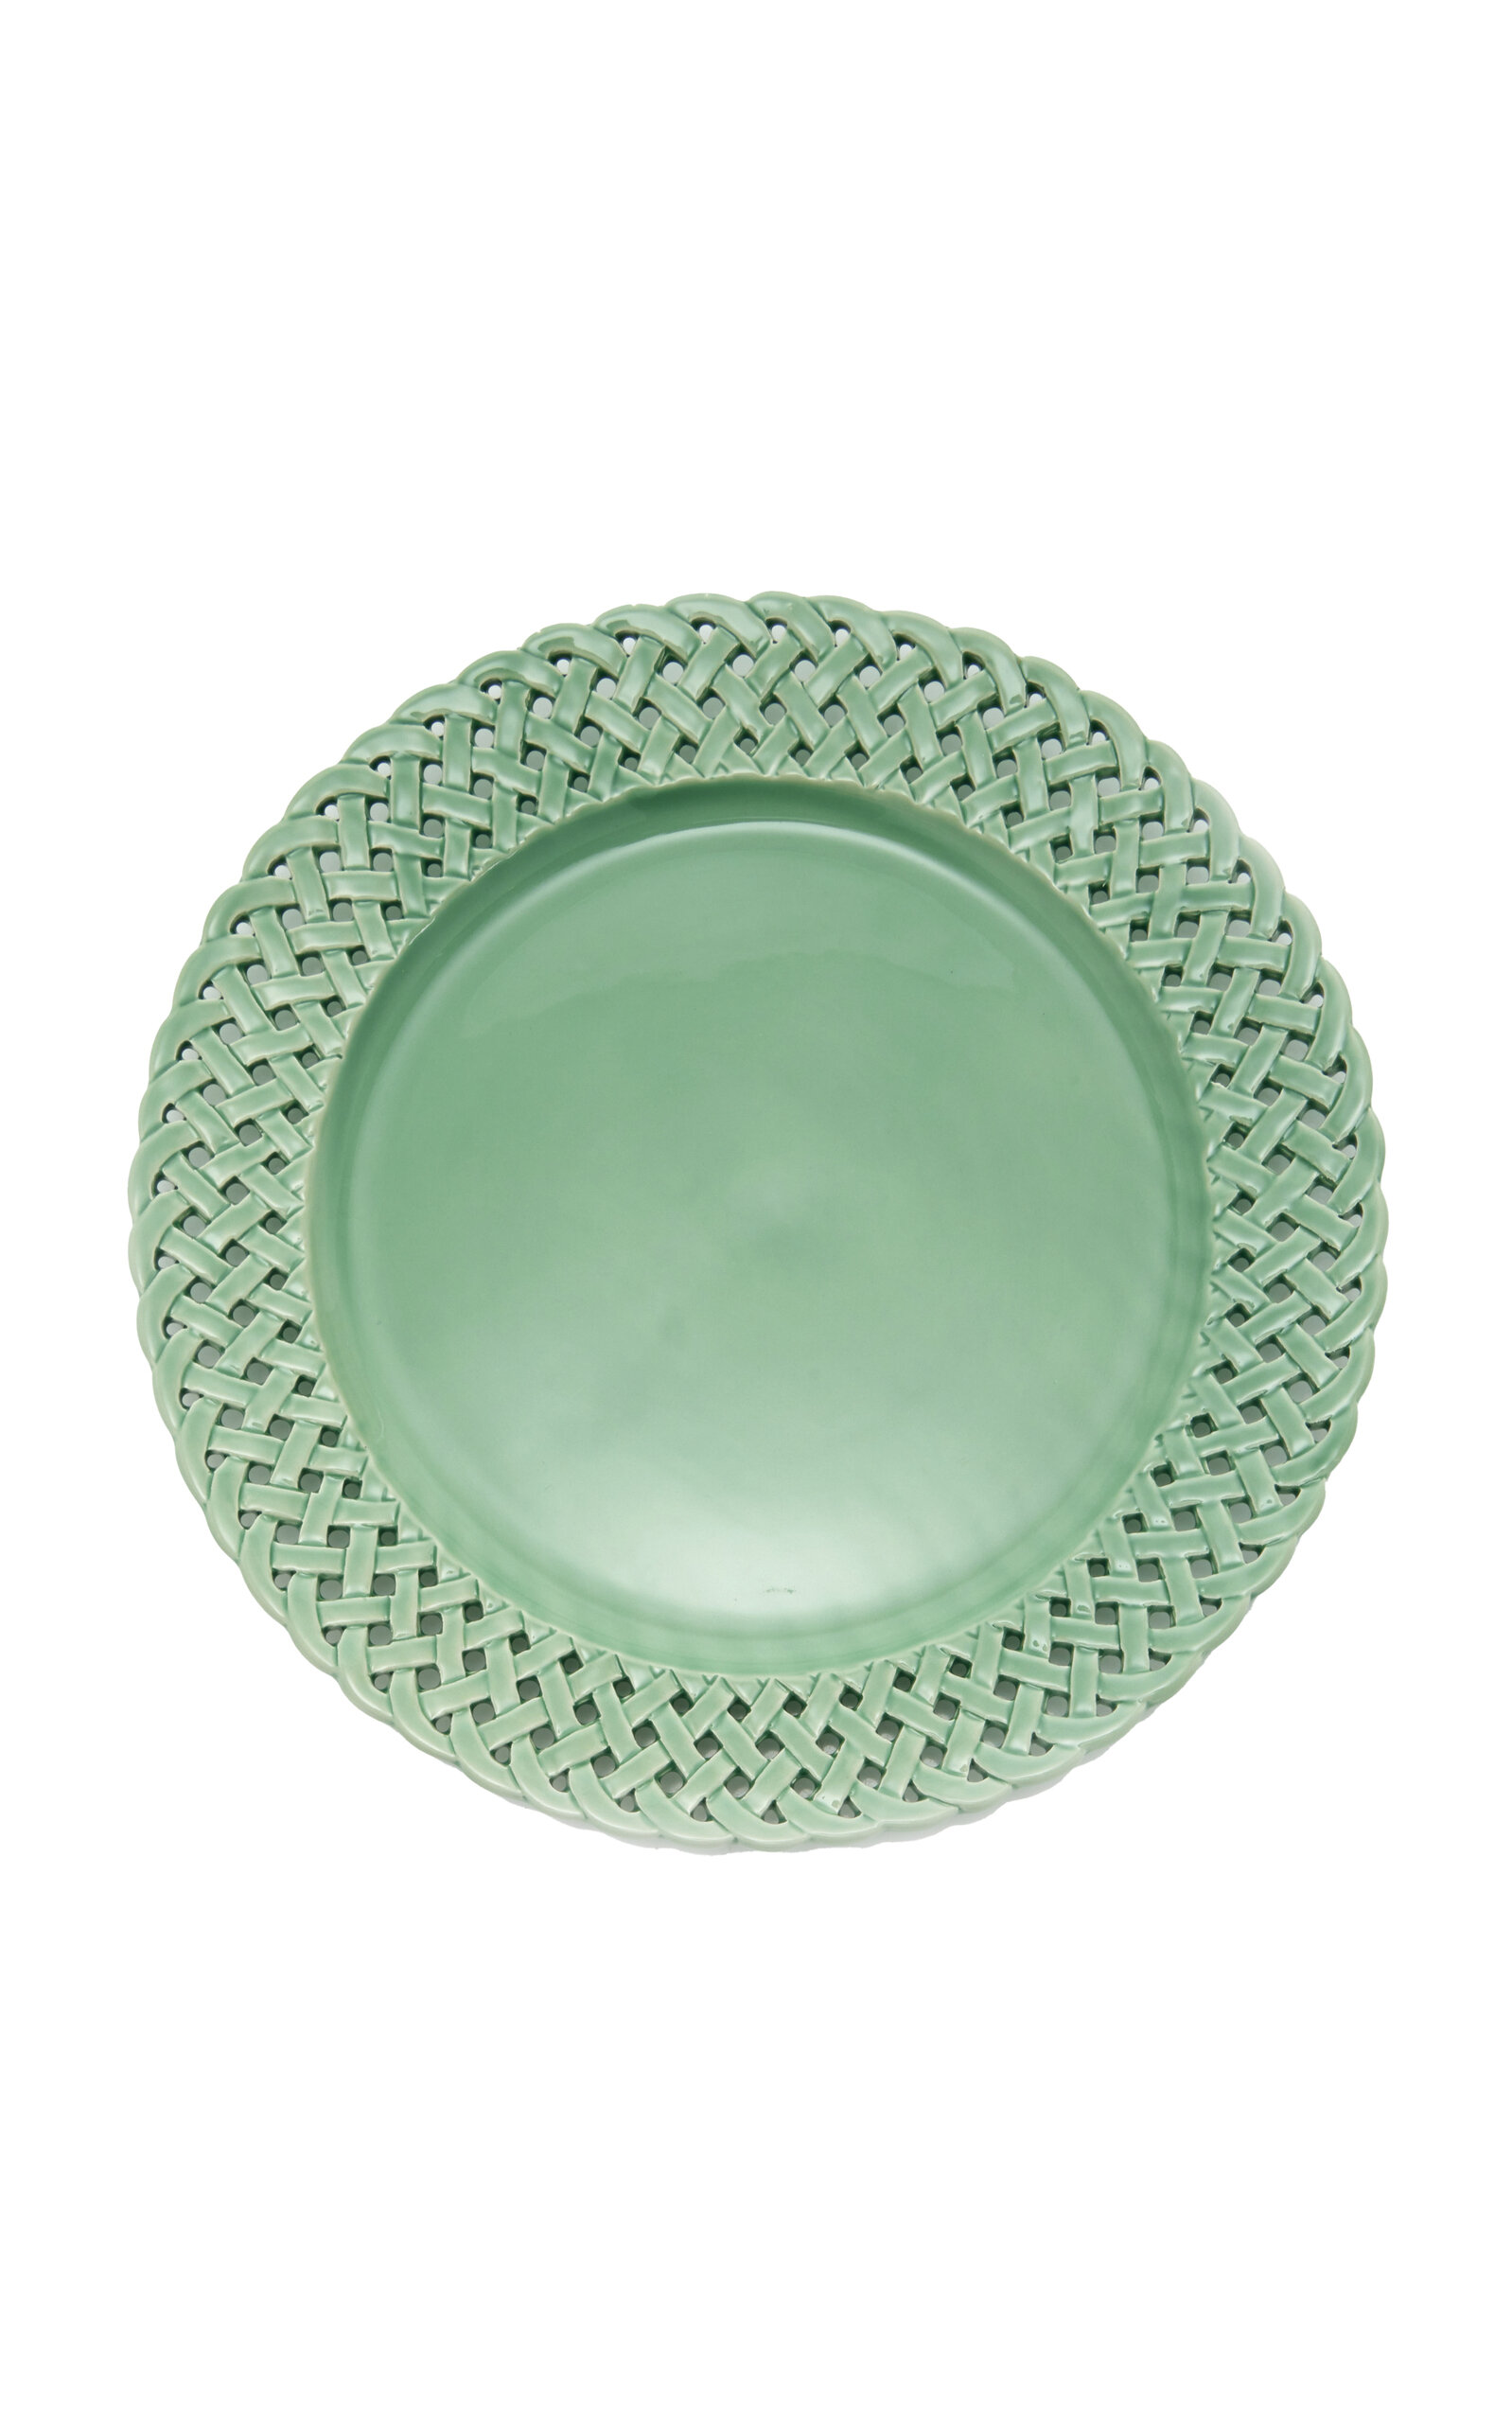 Moda Domus Hopenwork Creamware Charger Plate In Green